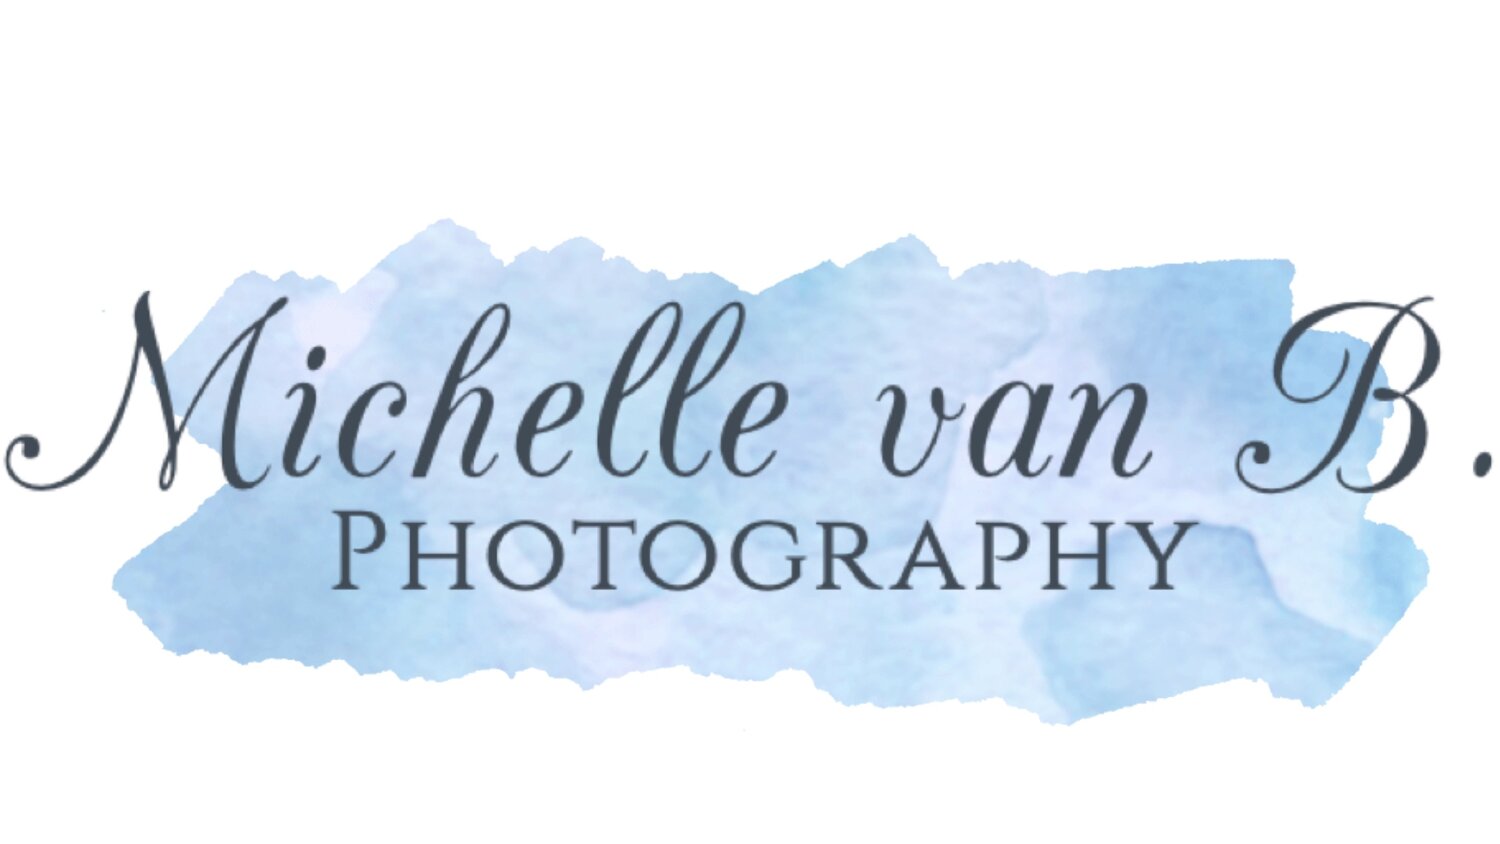 Michelle van B. Photography